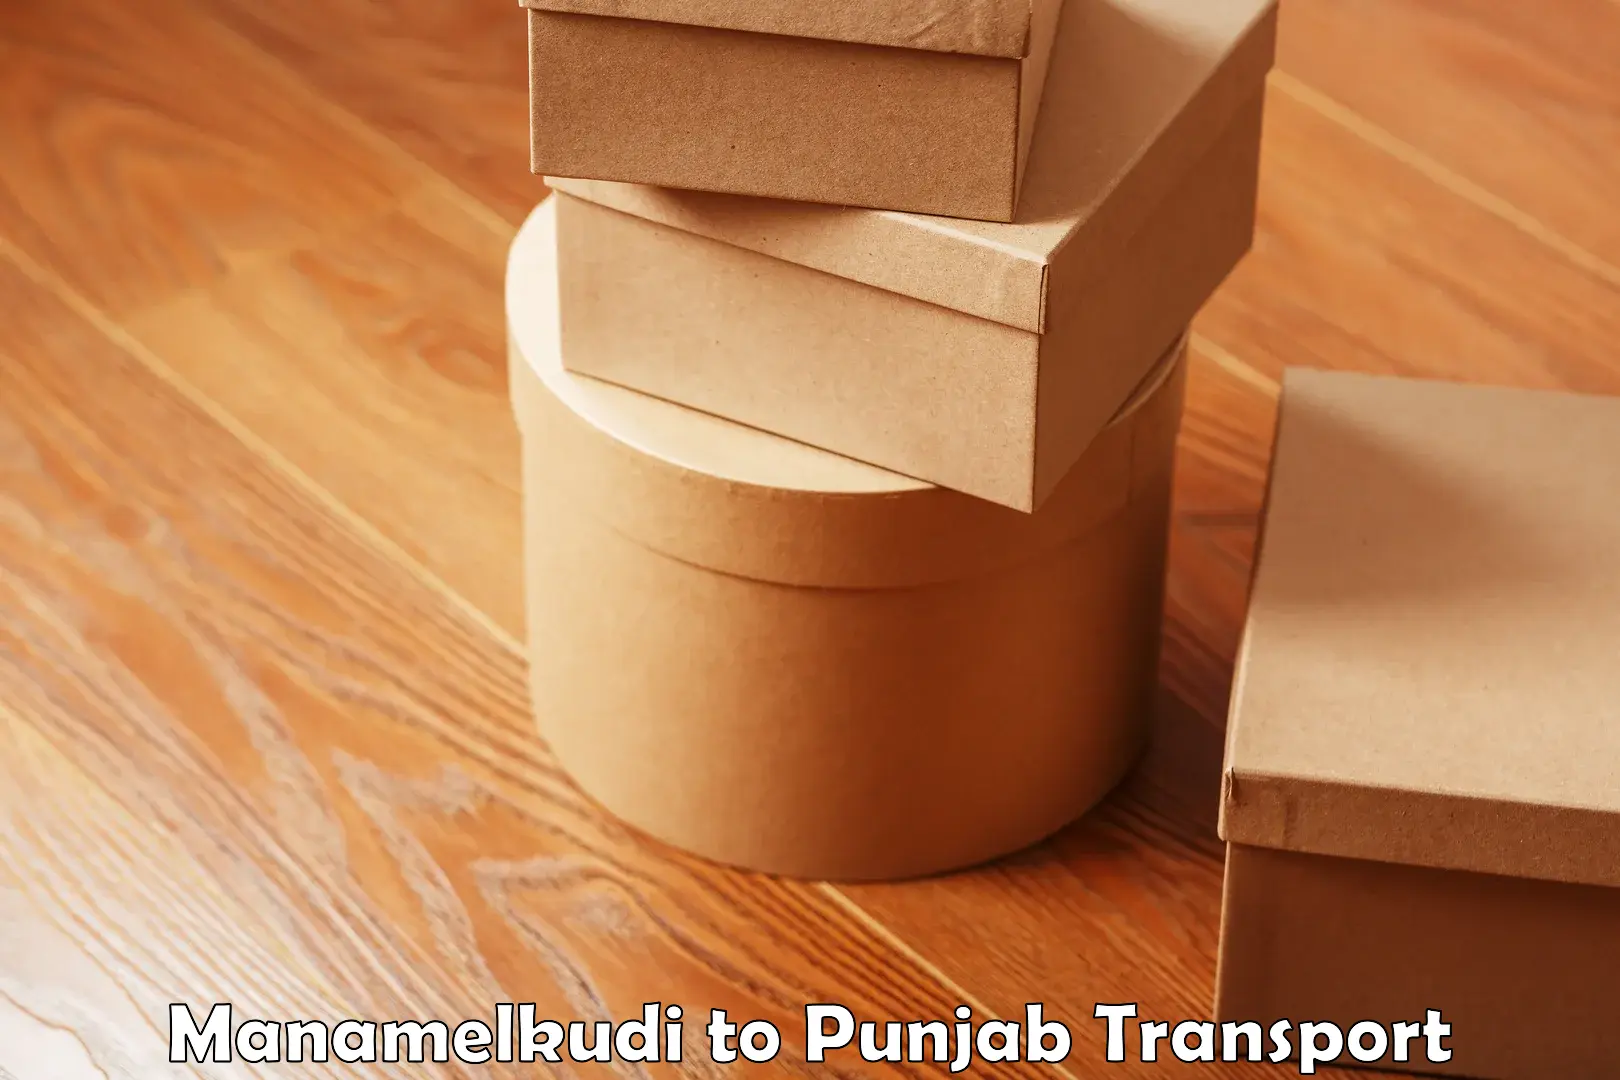 Transport shared services Manamelkudi to Punjab